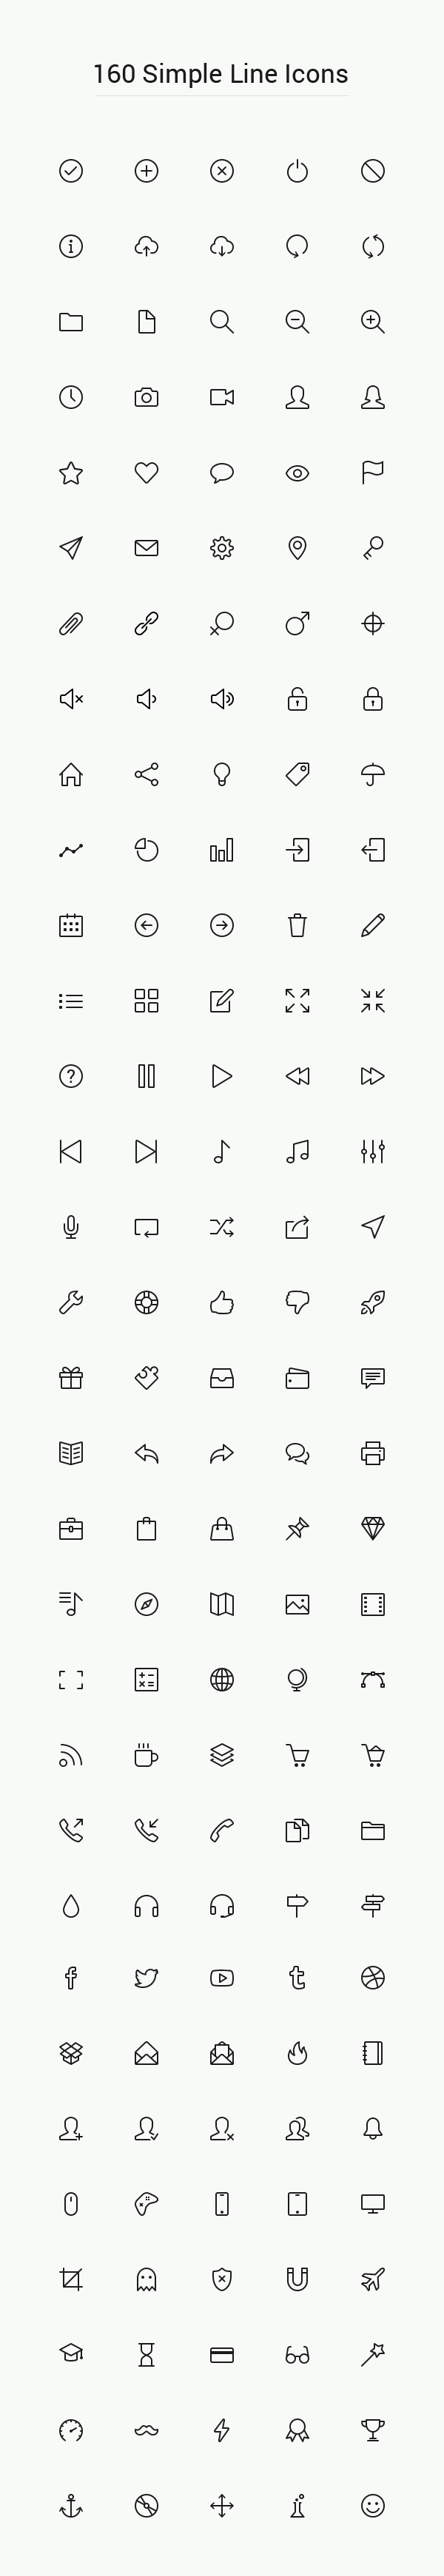 Free line icons